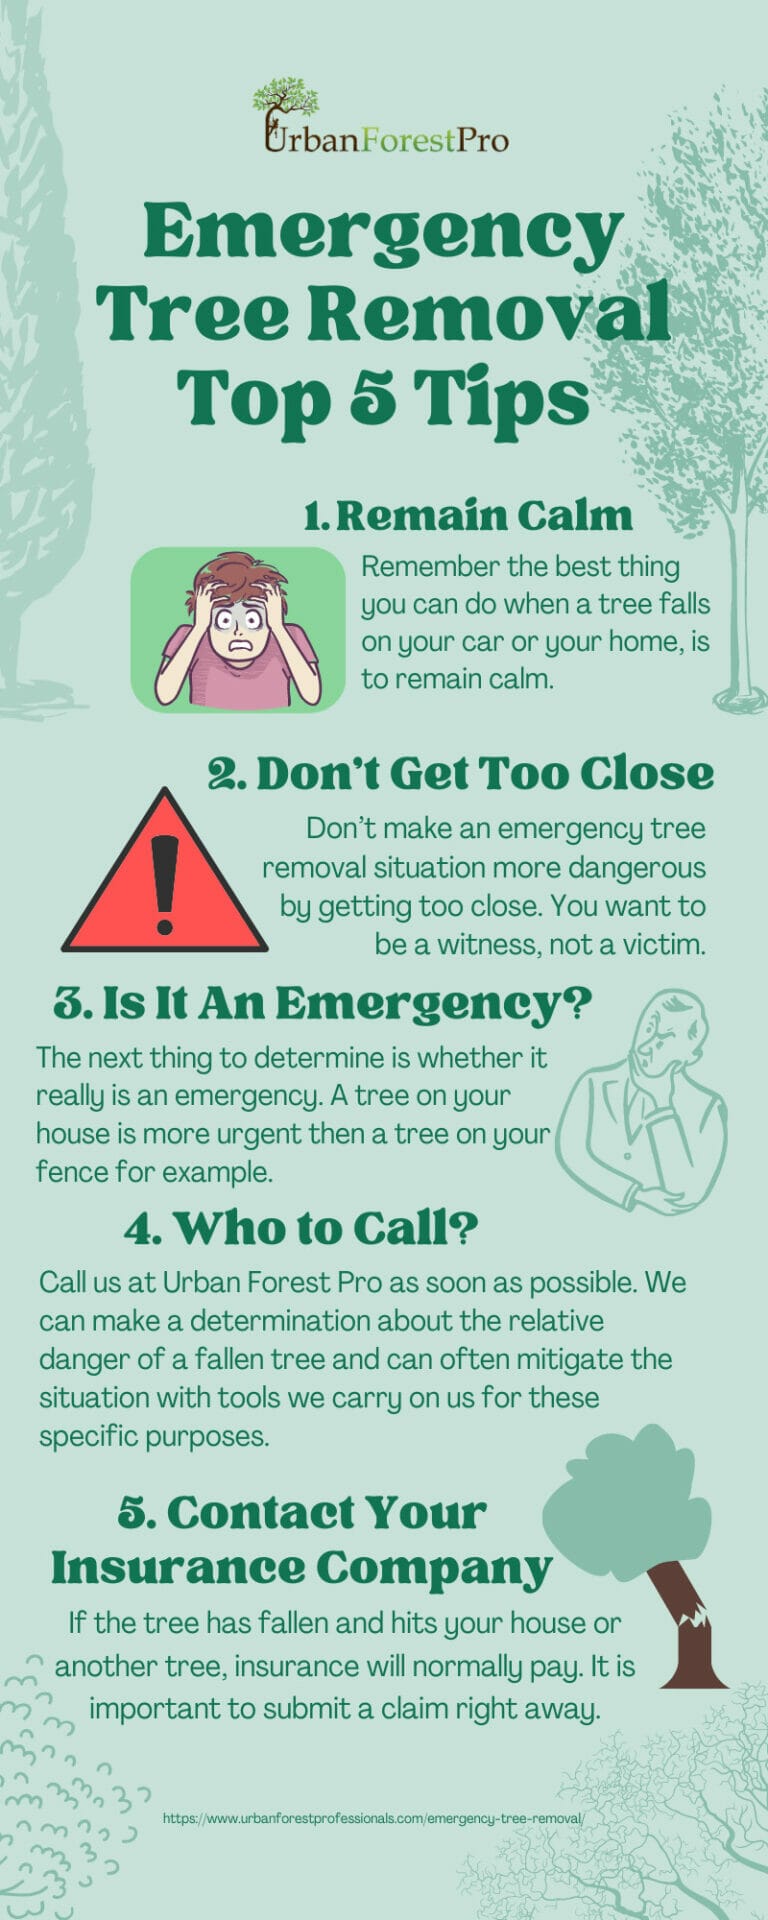 24/7 Emergency Tree Service